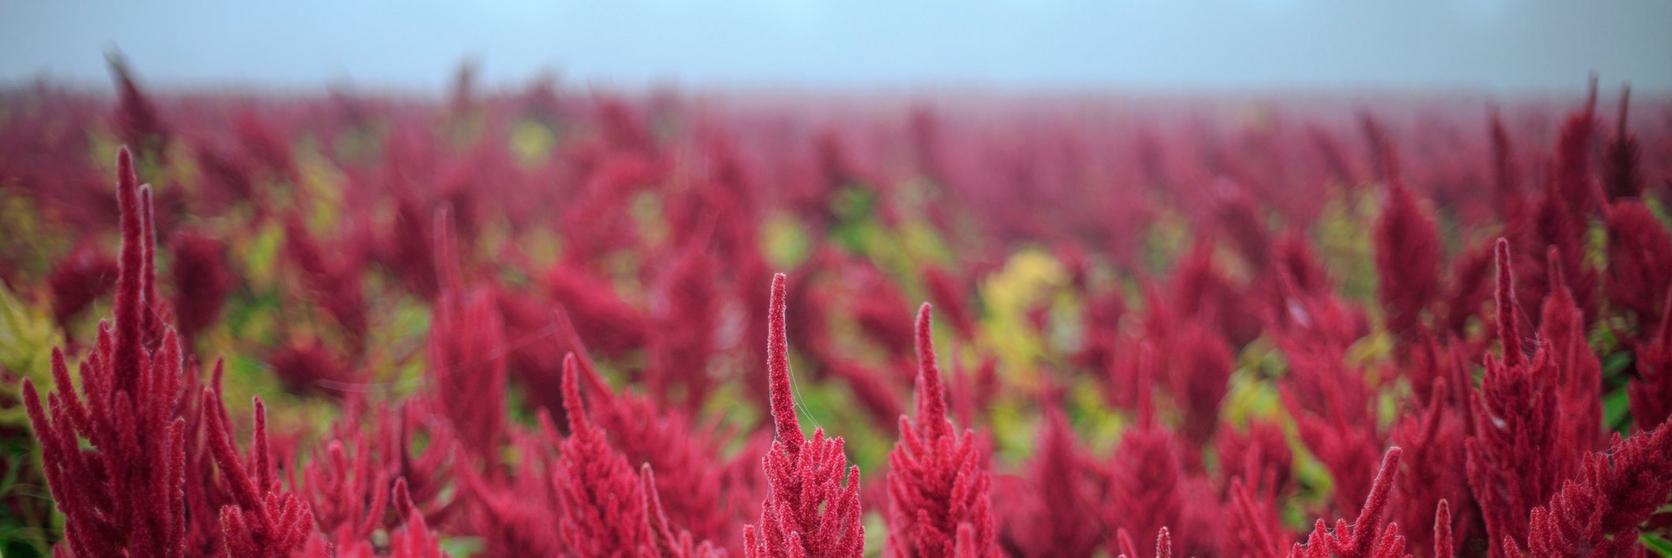 Amaranthus-red-field